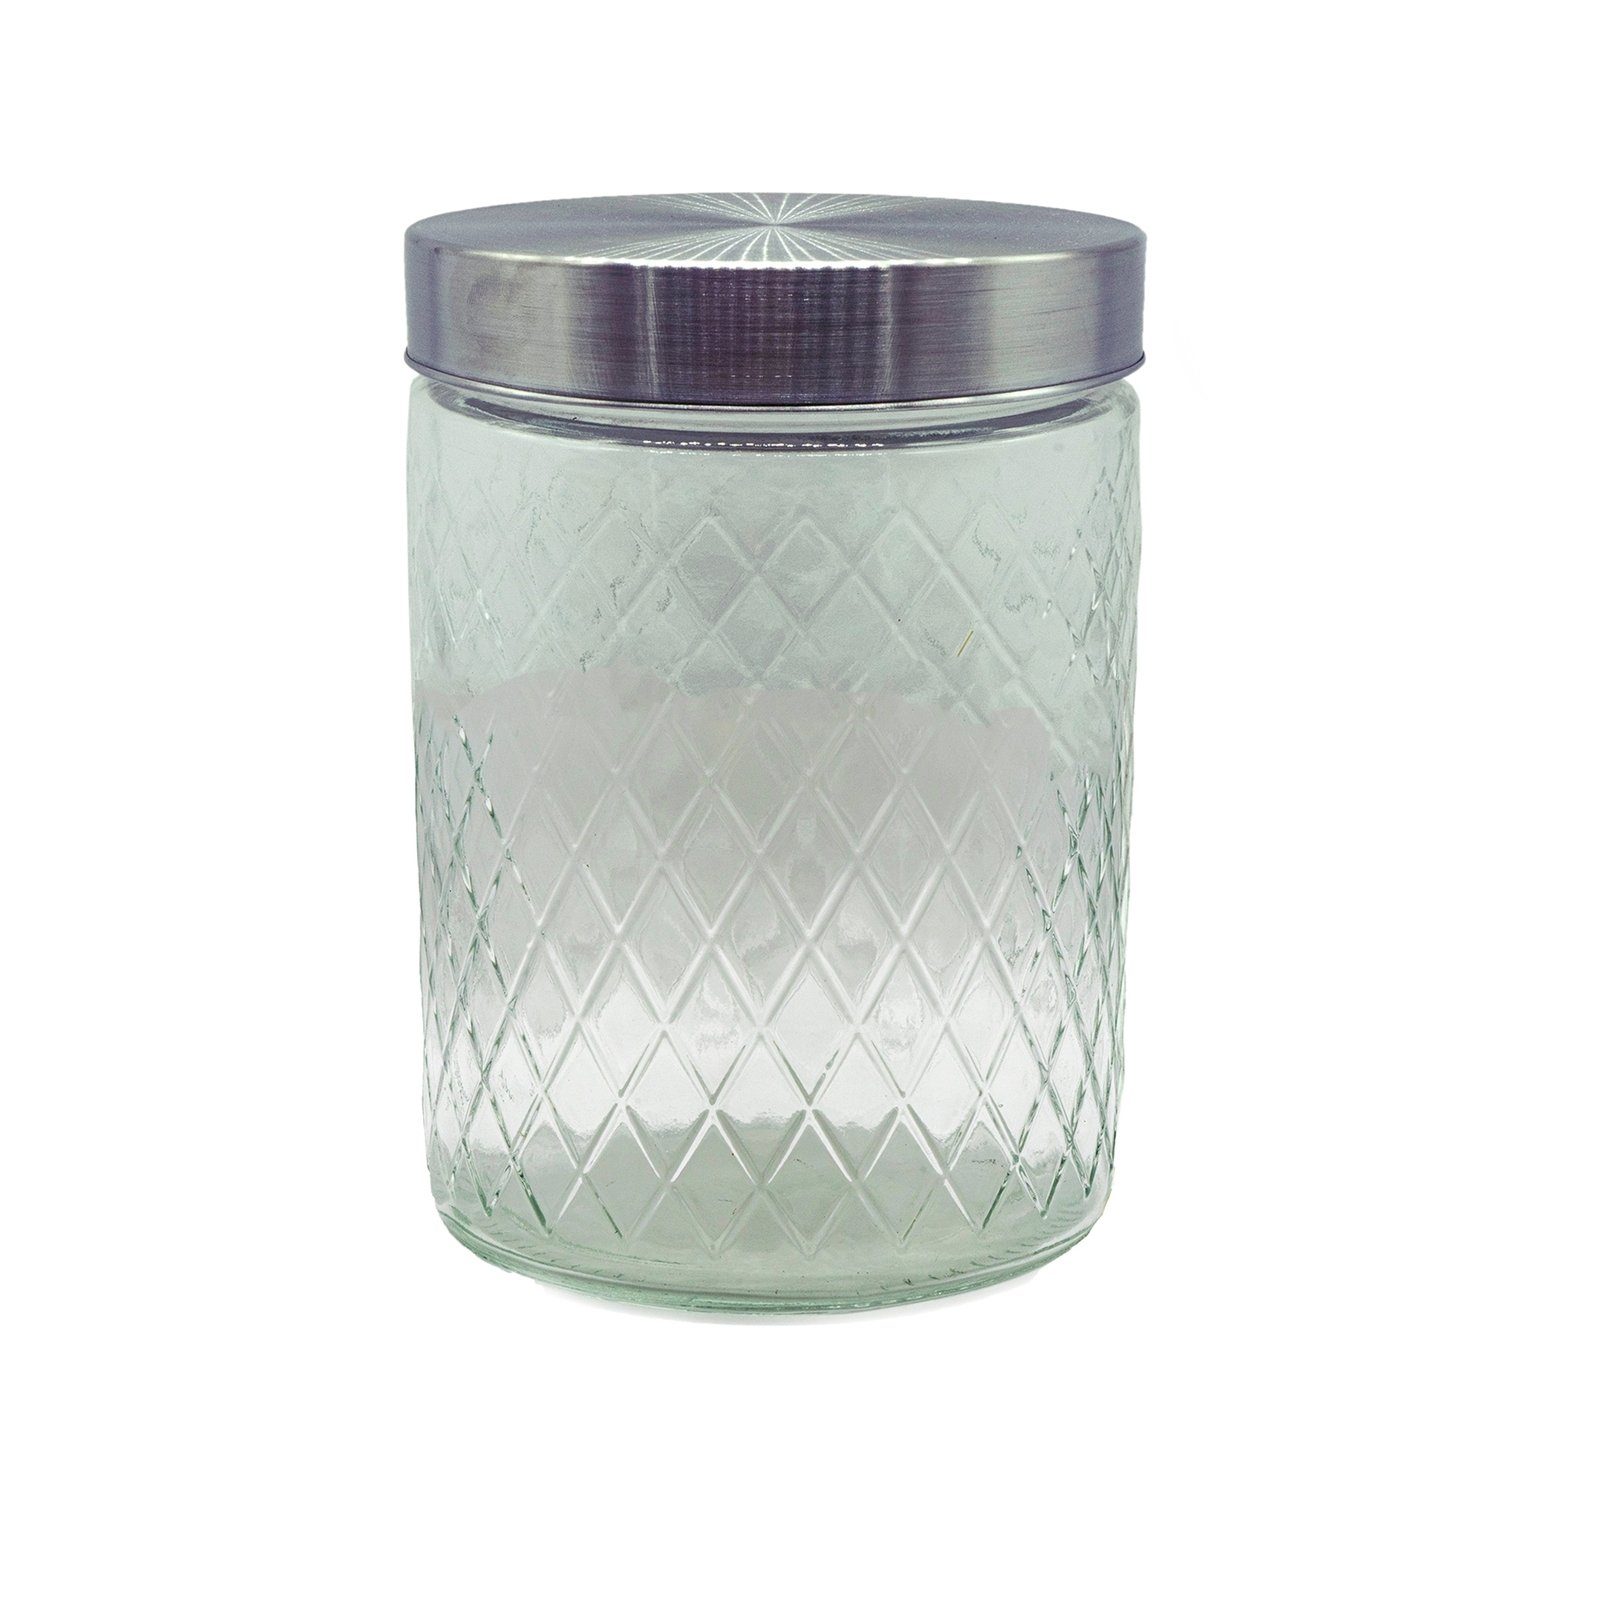 Vorratsglas Edelstahldeckel Glas, Edelstahl, Neuetischkultur Vorratsglas Rauten-Prägung, mit Rautenprägung